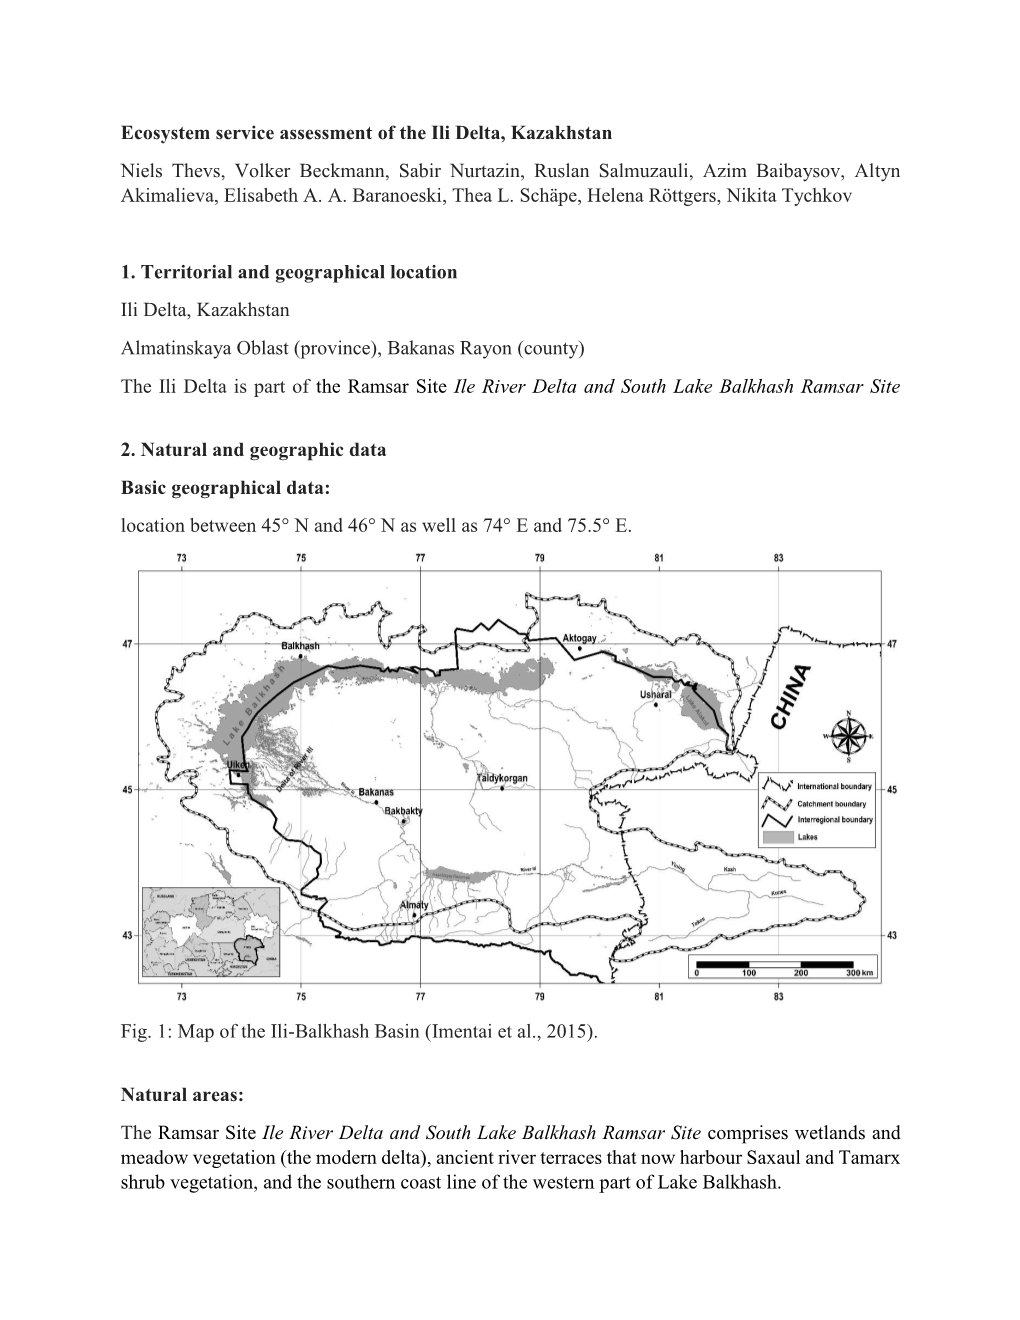 Ecosystem Service Assessment of the Ili Delta, Kazakhstan Niels Thevs